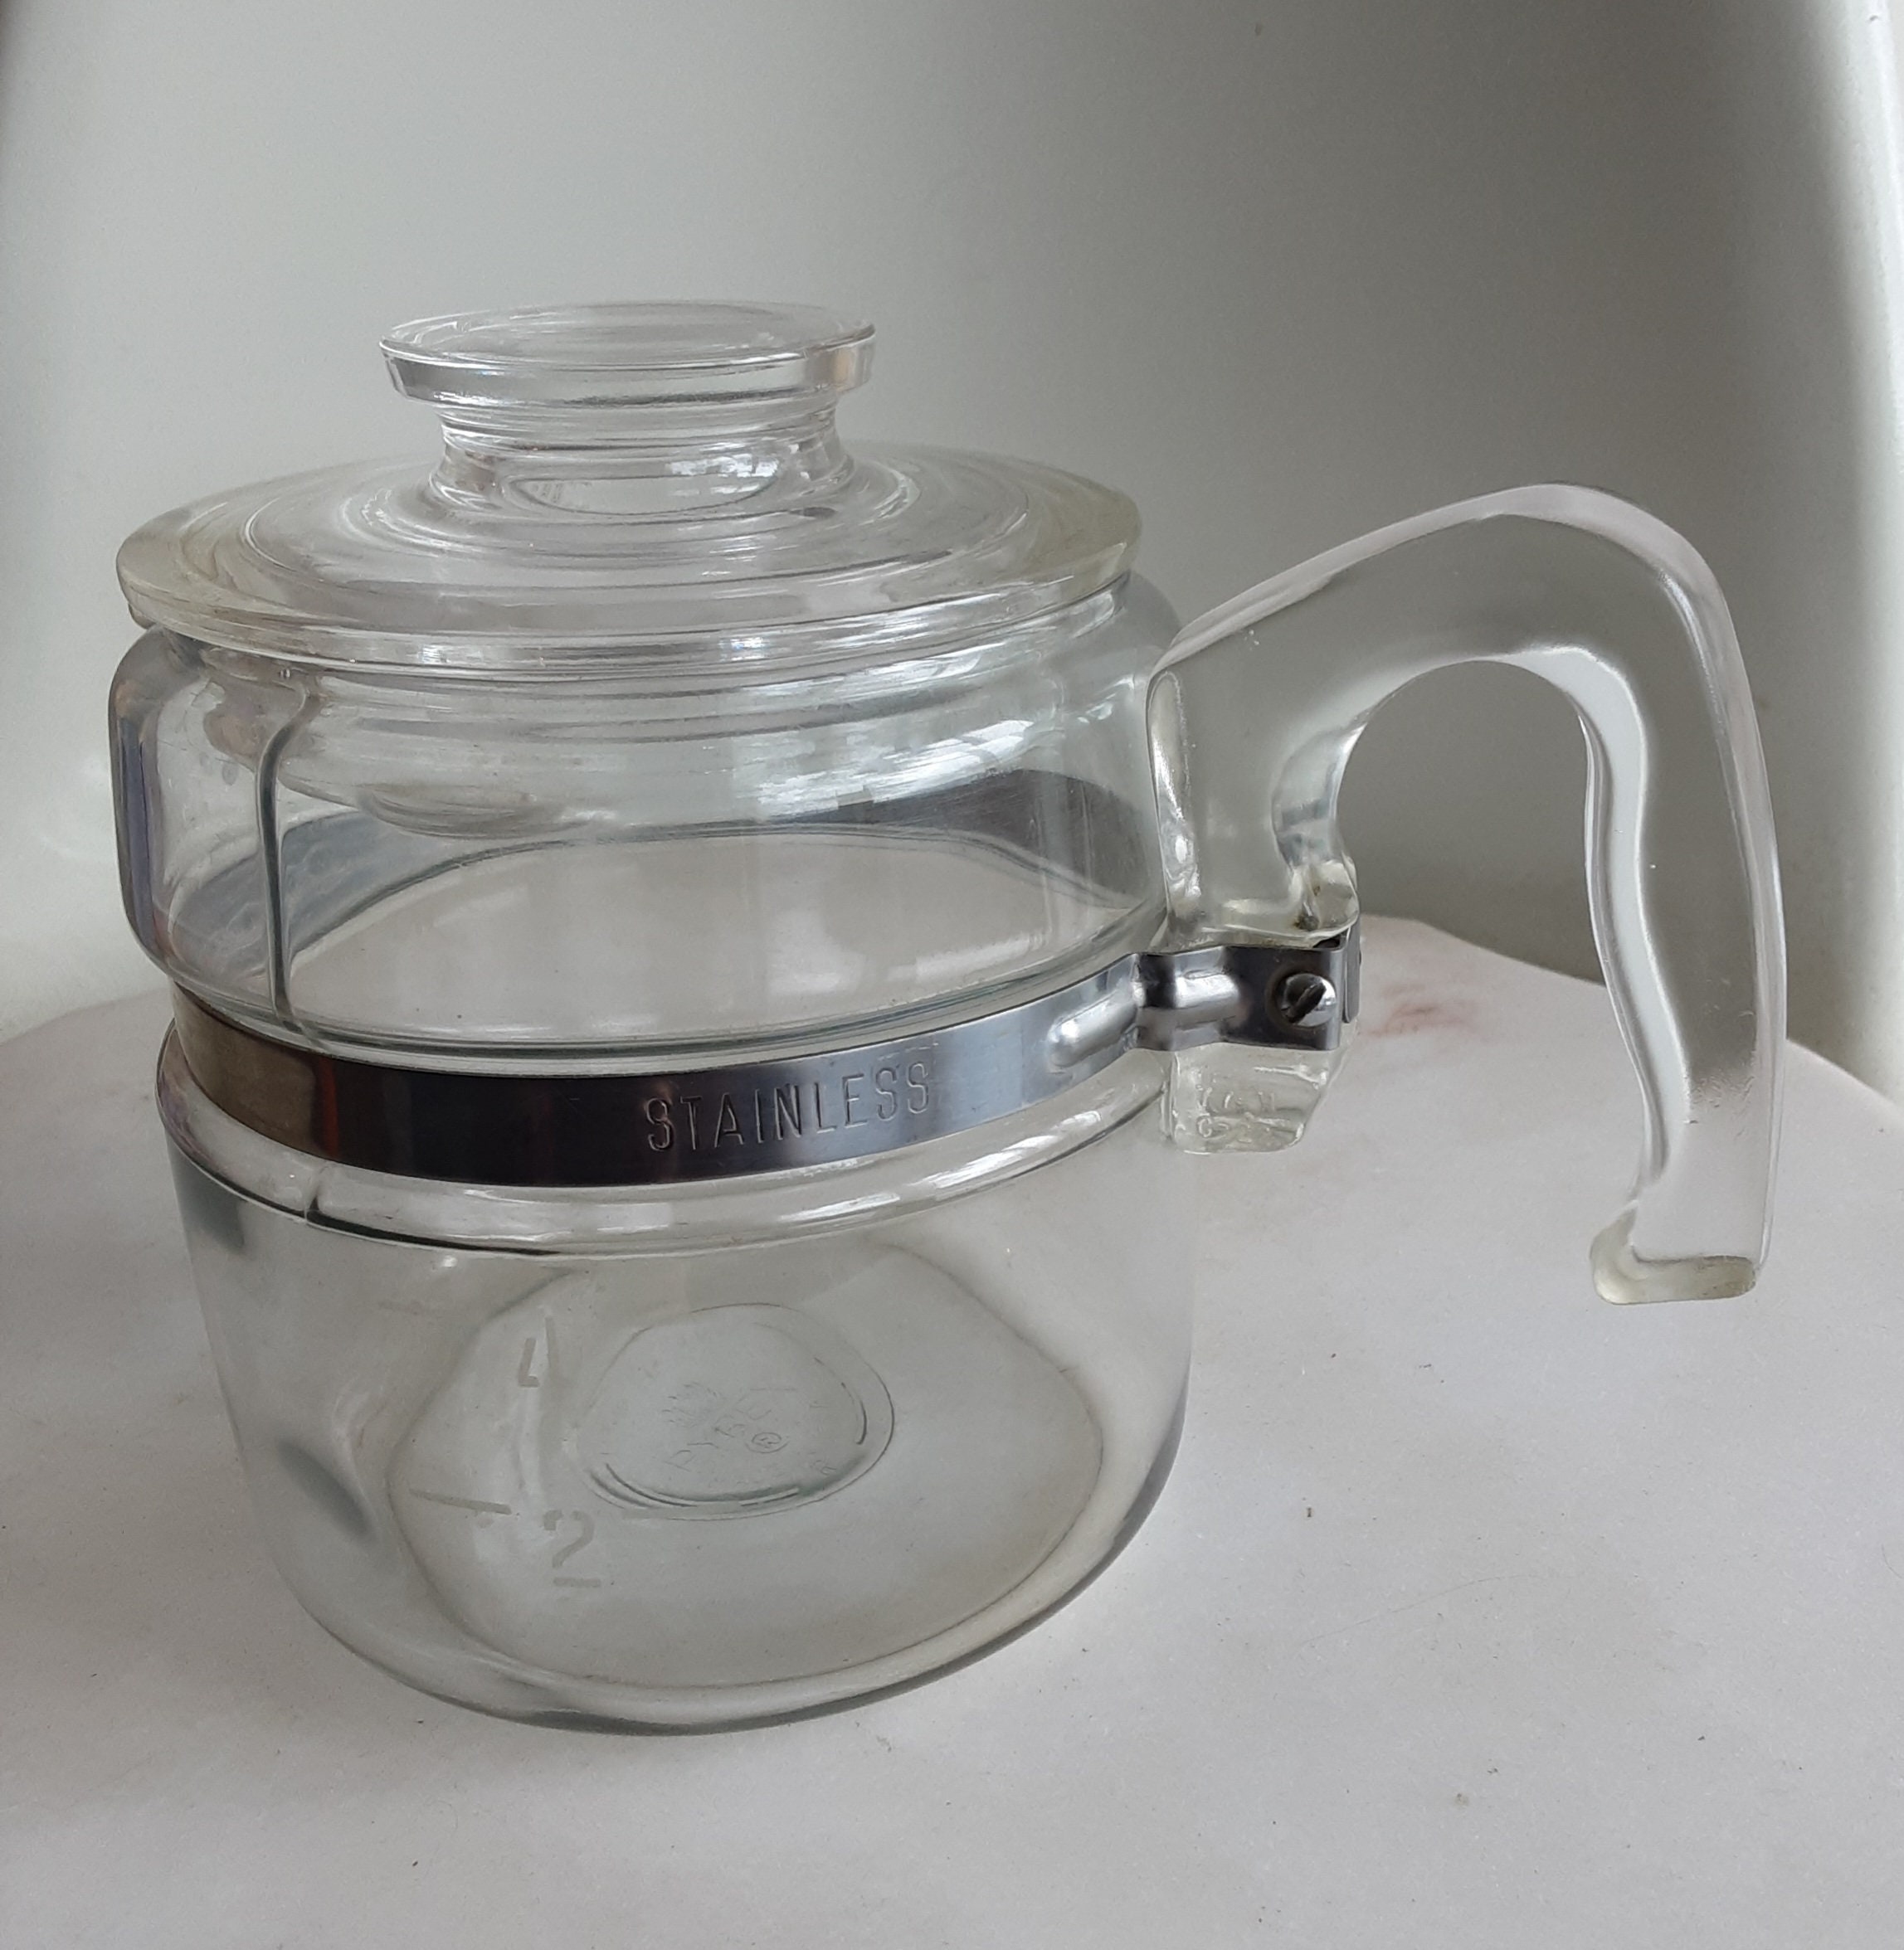 Classic Accessories Glass Steamer basket High resistance - Pyrex® Webshop AR